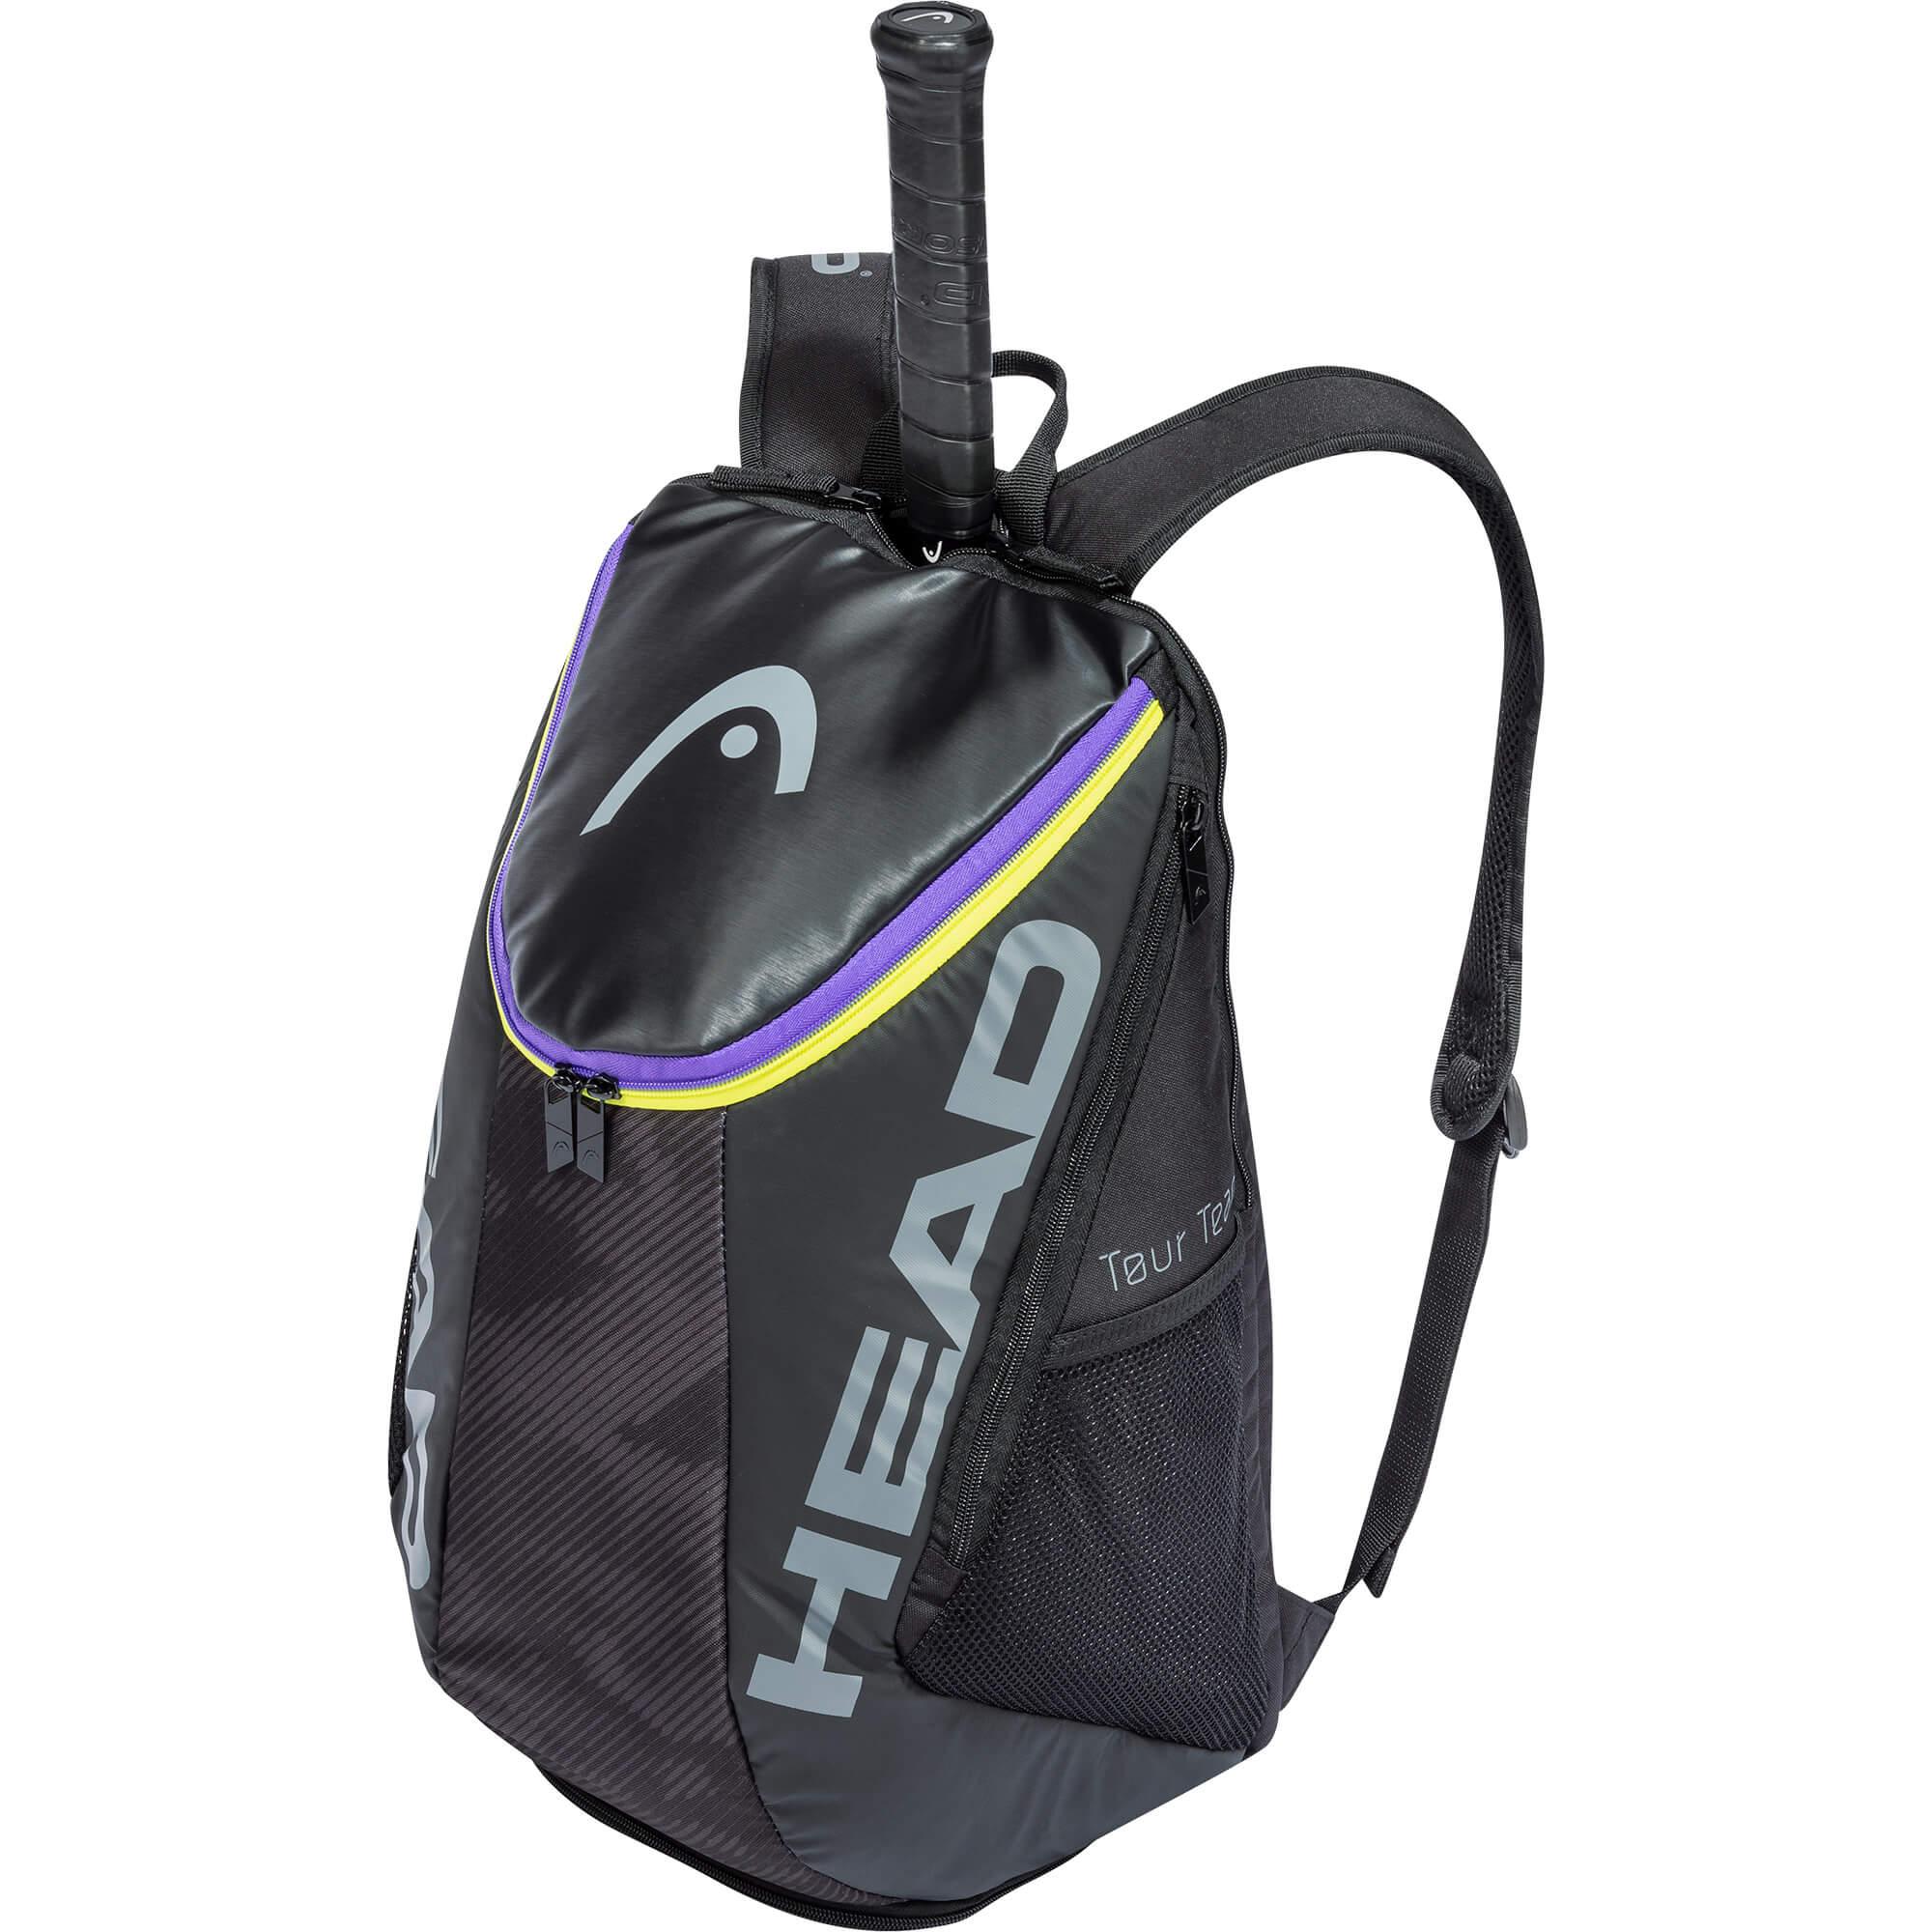 Boost benzine Rally Head Tour Team Backpack - Black/Purple/Yellow - Ray's Rackets